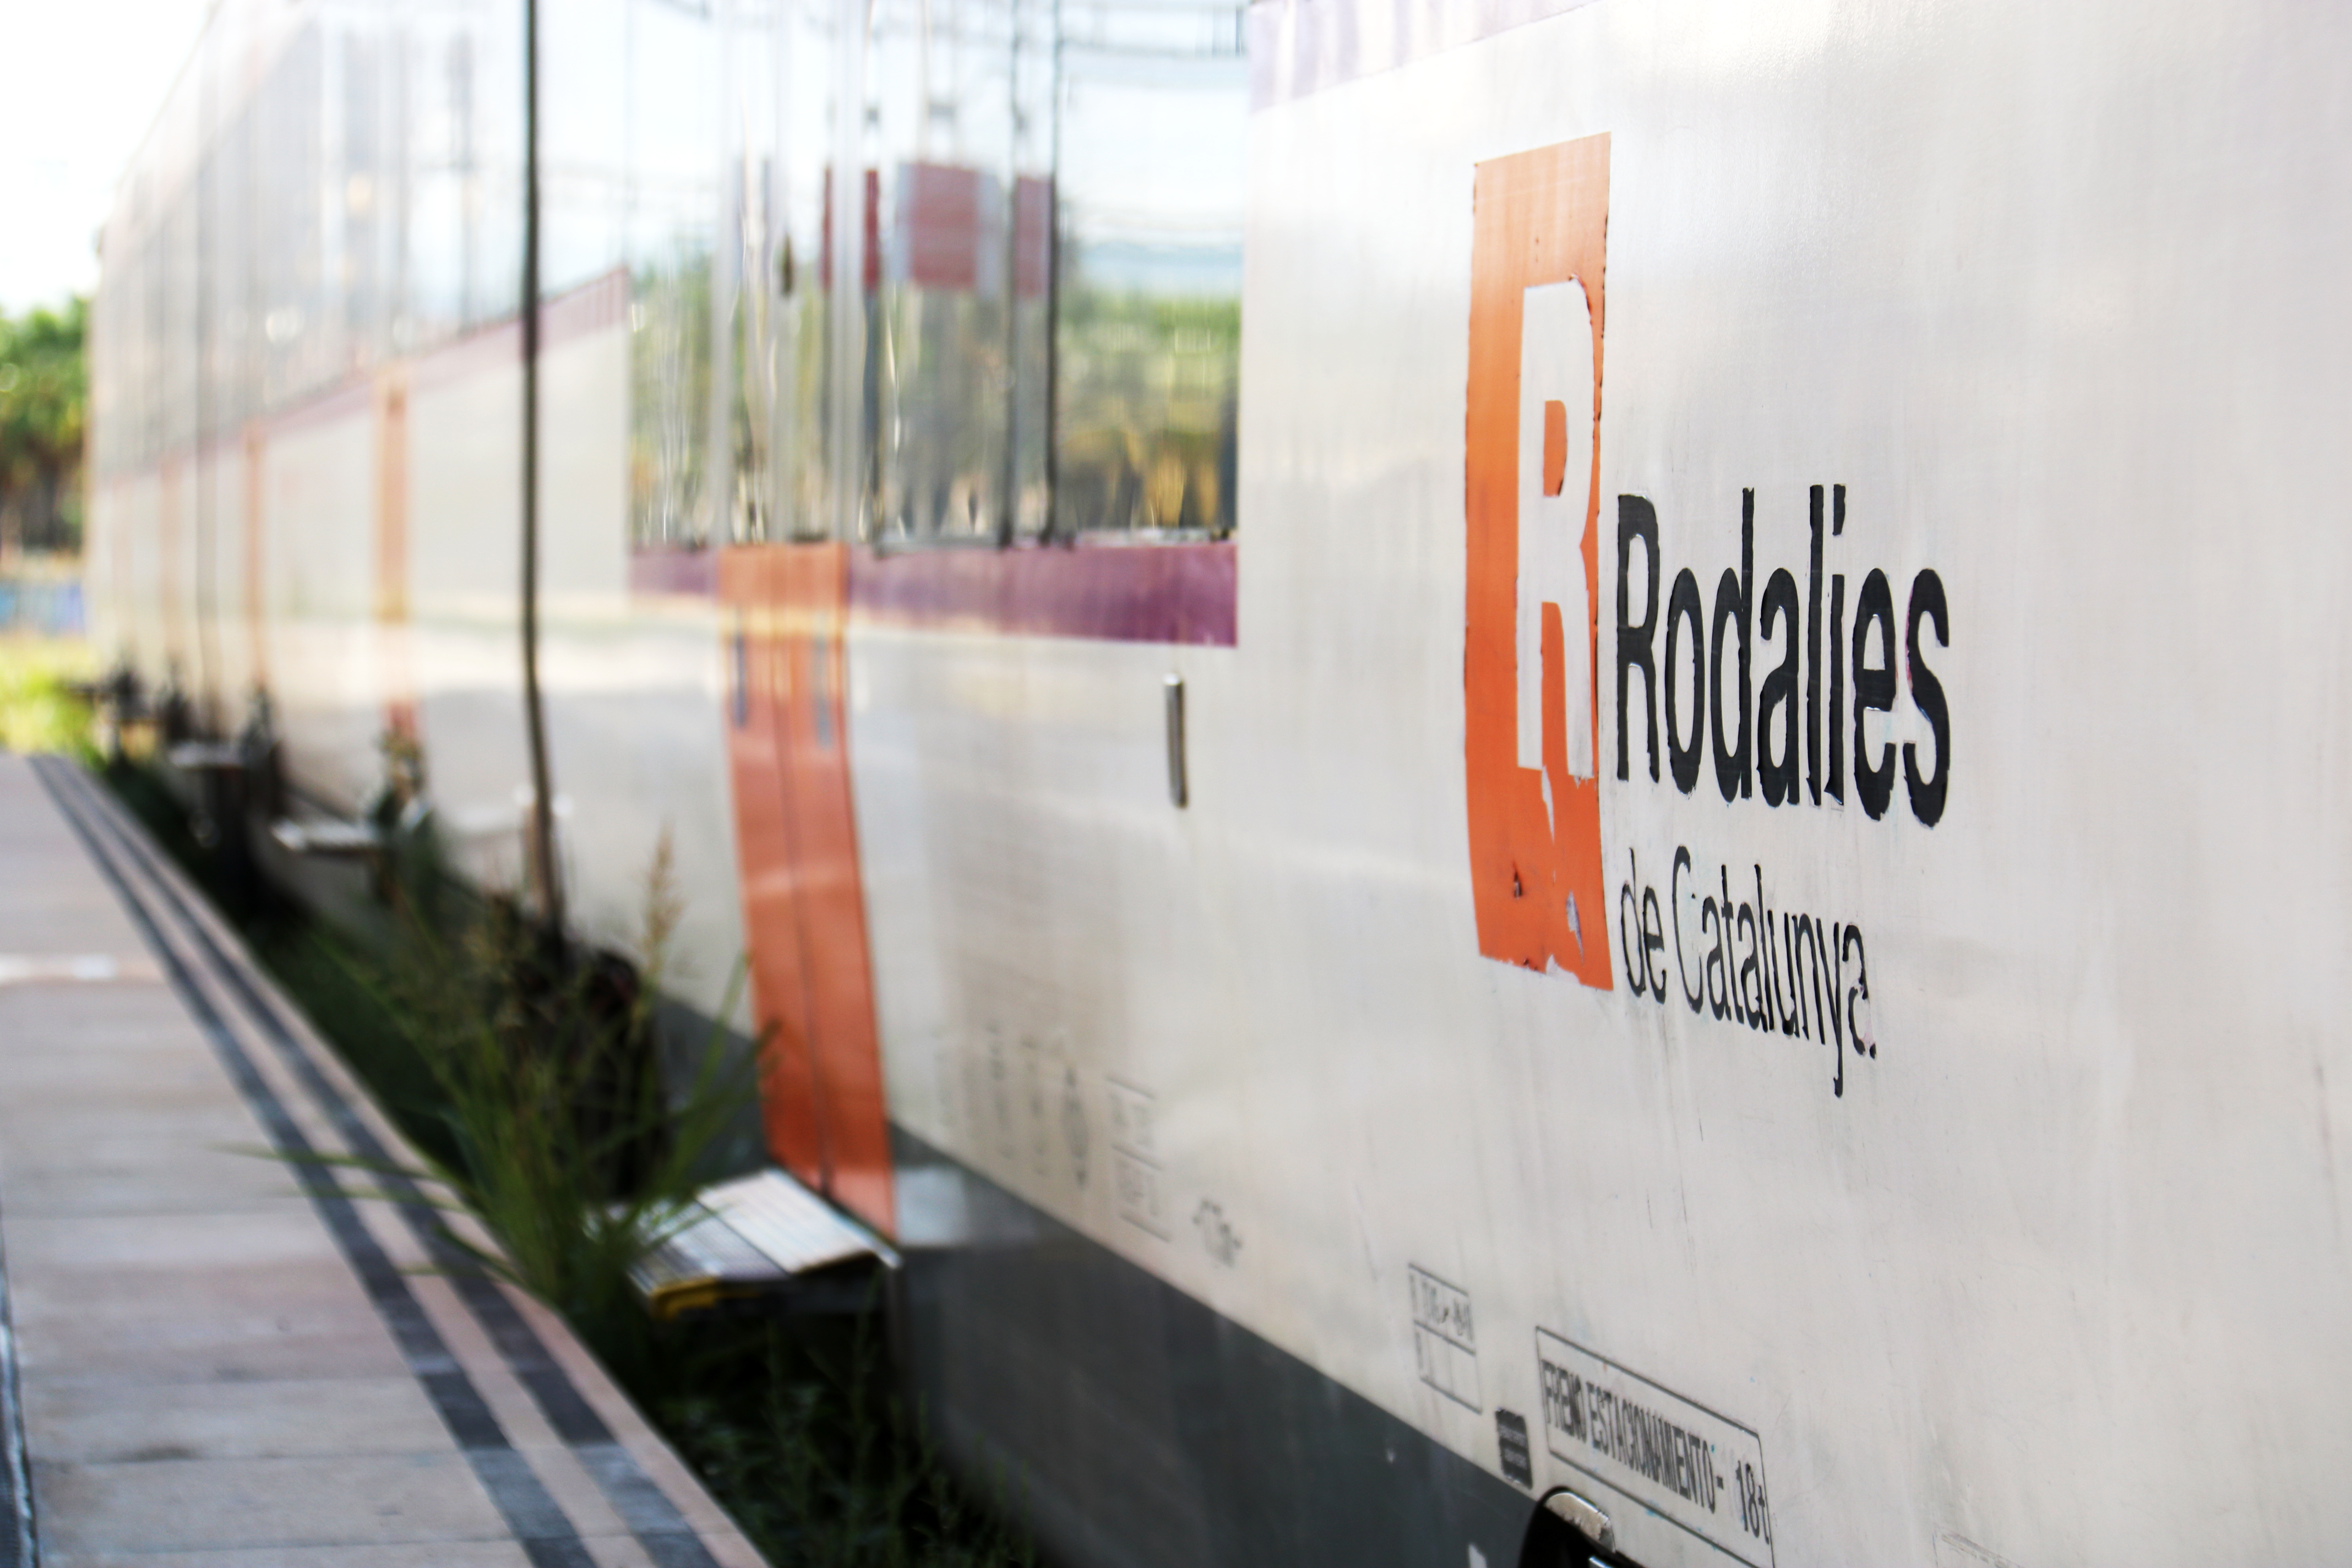 A Rodalies commuter train in Mataró, photo from September 2022